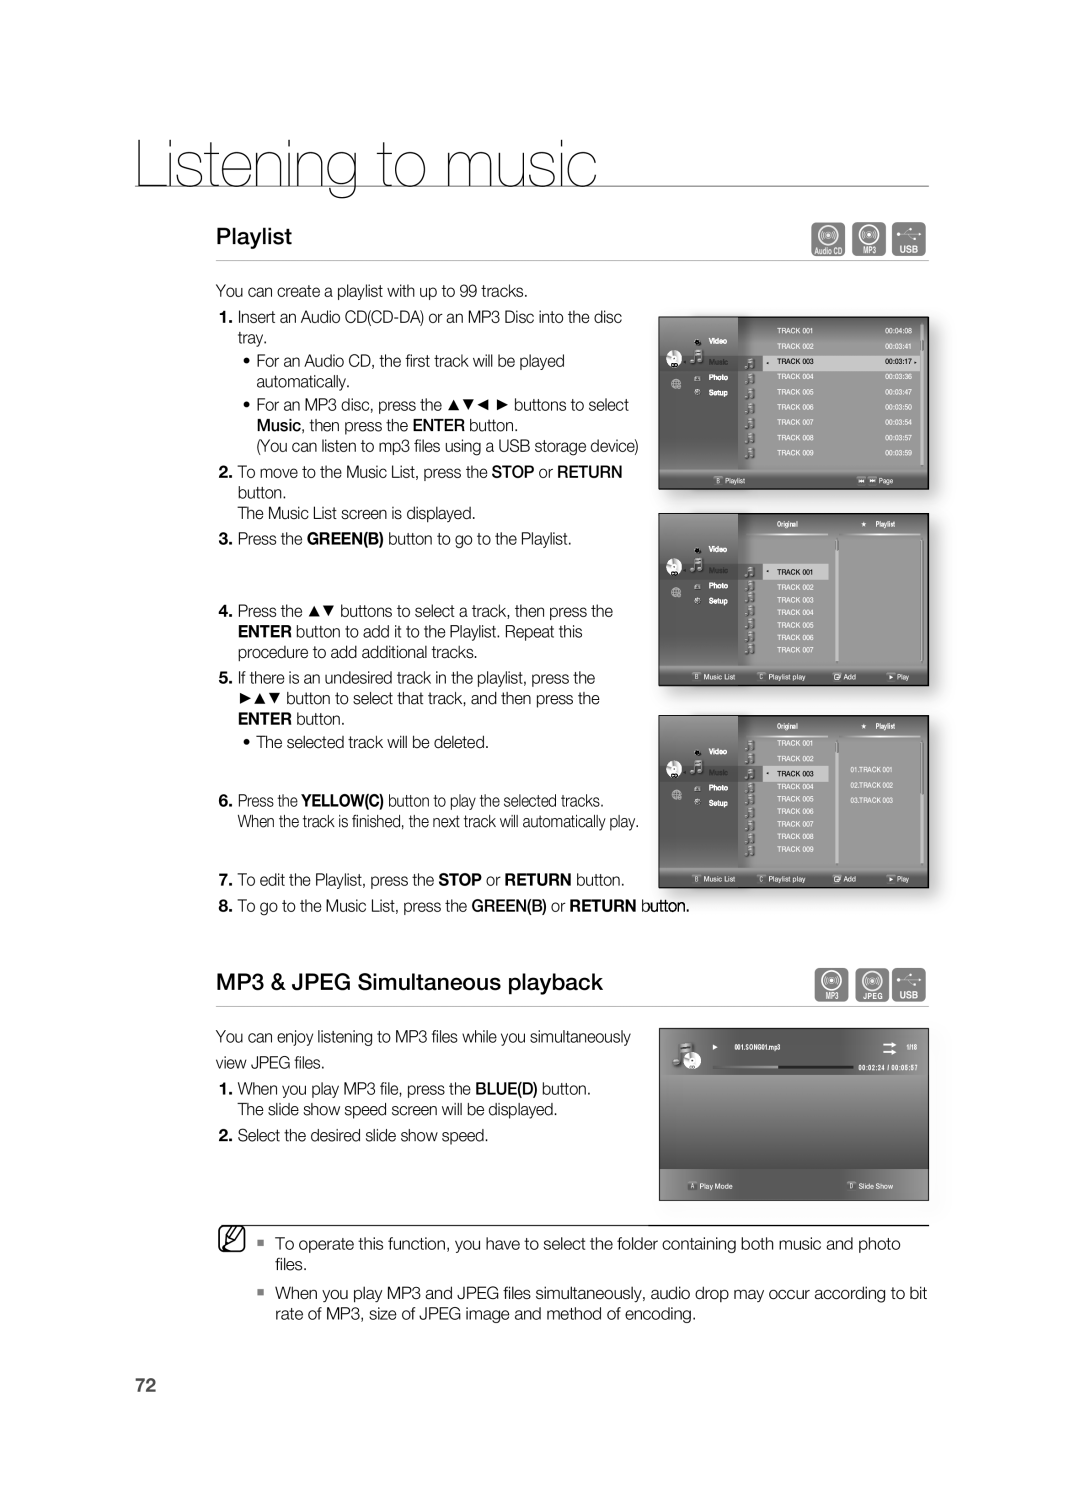 Samsung HT-BD3252 Playlist, MP3 & JPEG Simultaneous playbackAF, Listening to music, automatically, ENTER button 